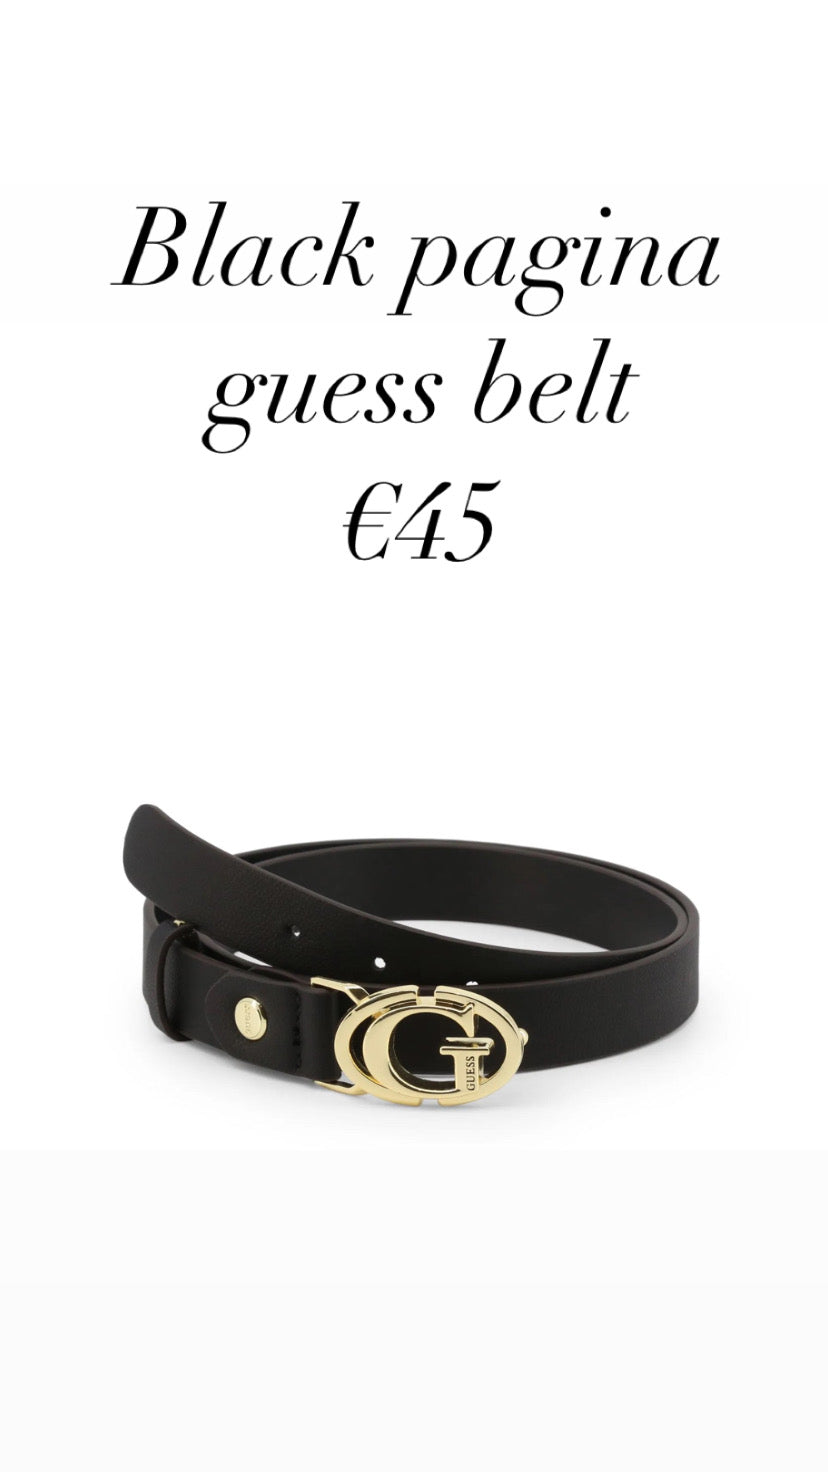 Black pagina guess belt